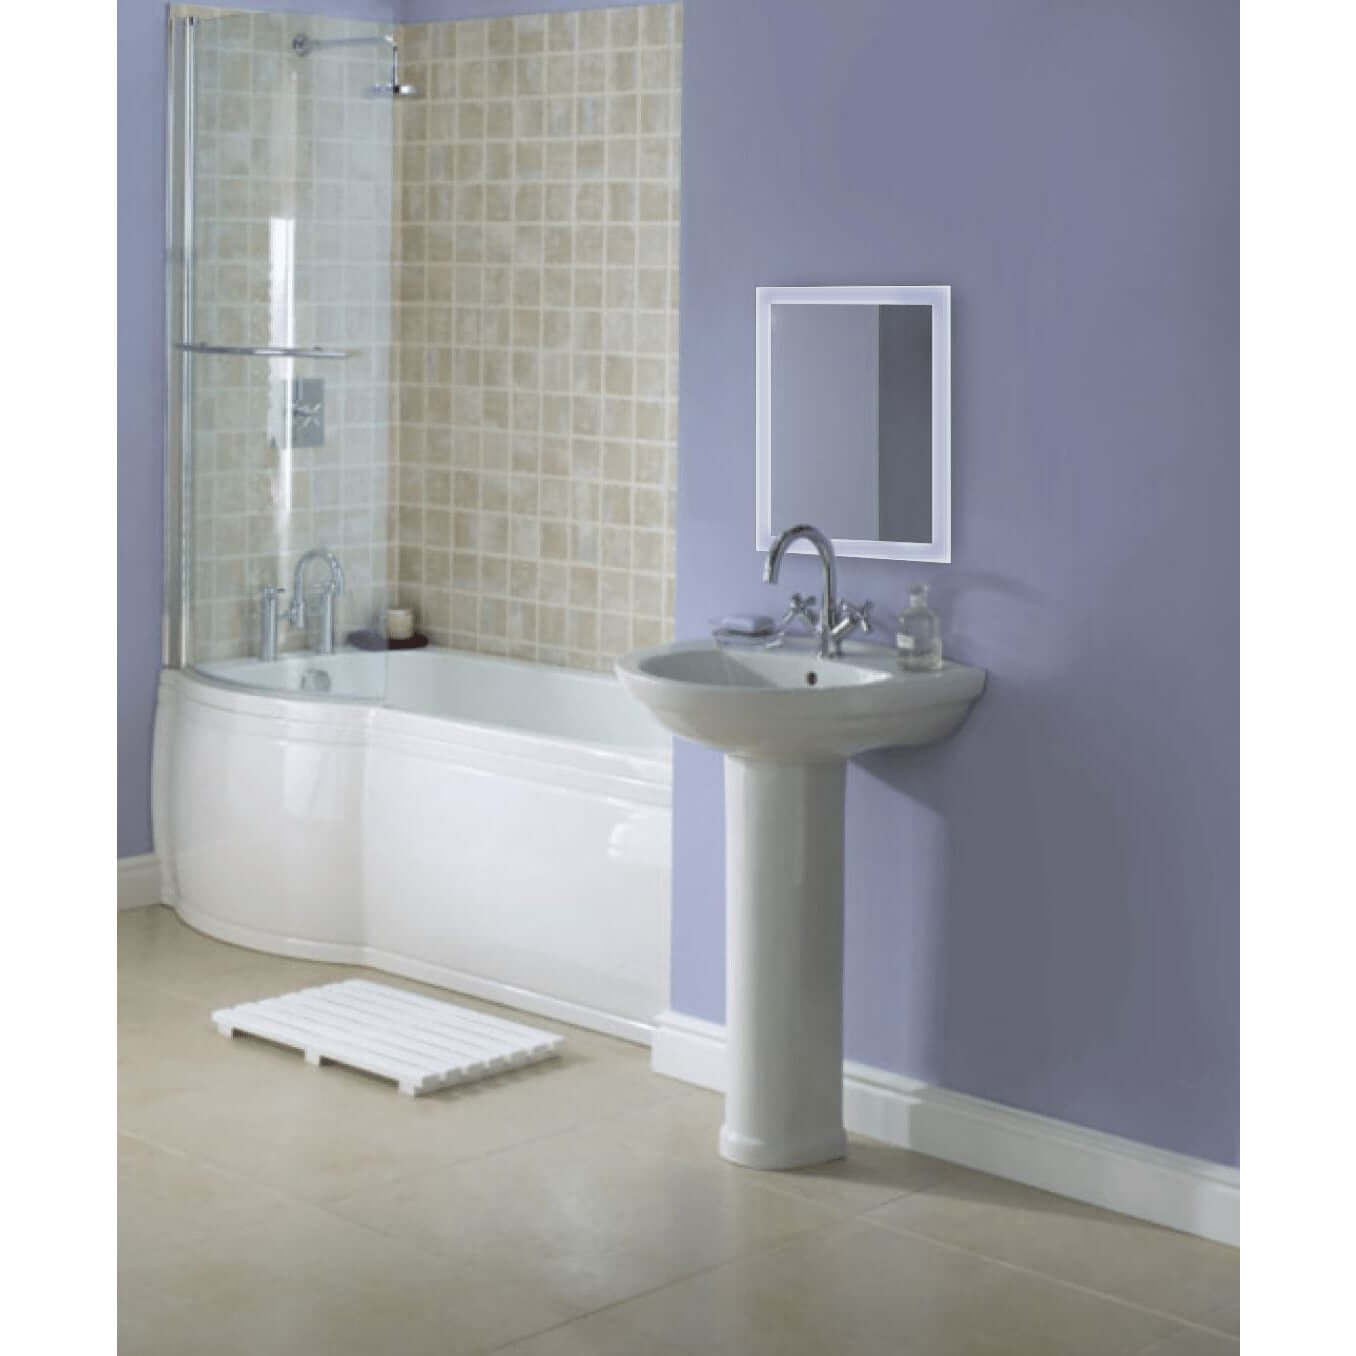 Elegant bathroom setup with Krugg Bijou 15 X 20 LED mirror above a white pedastal sink